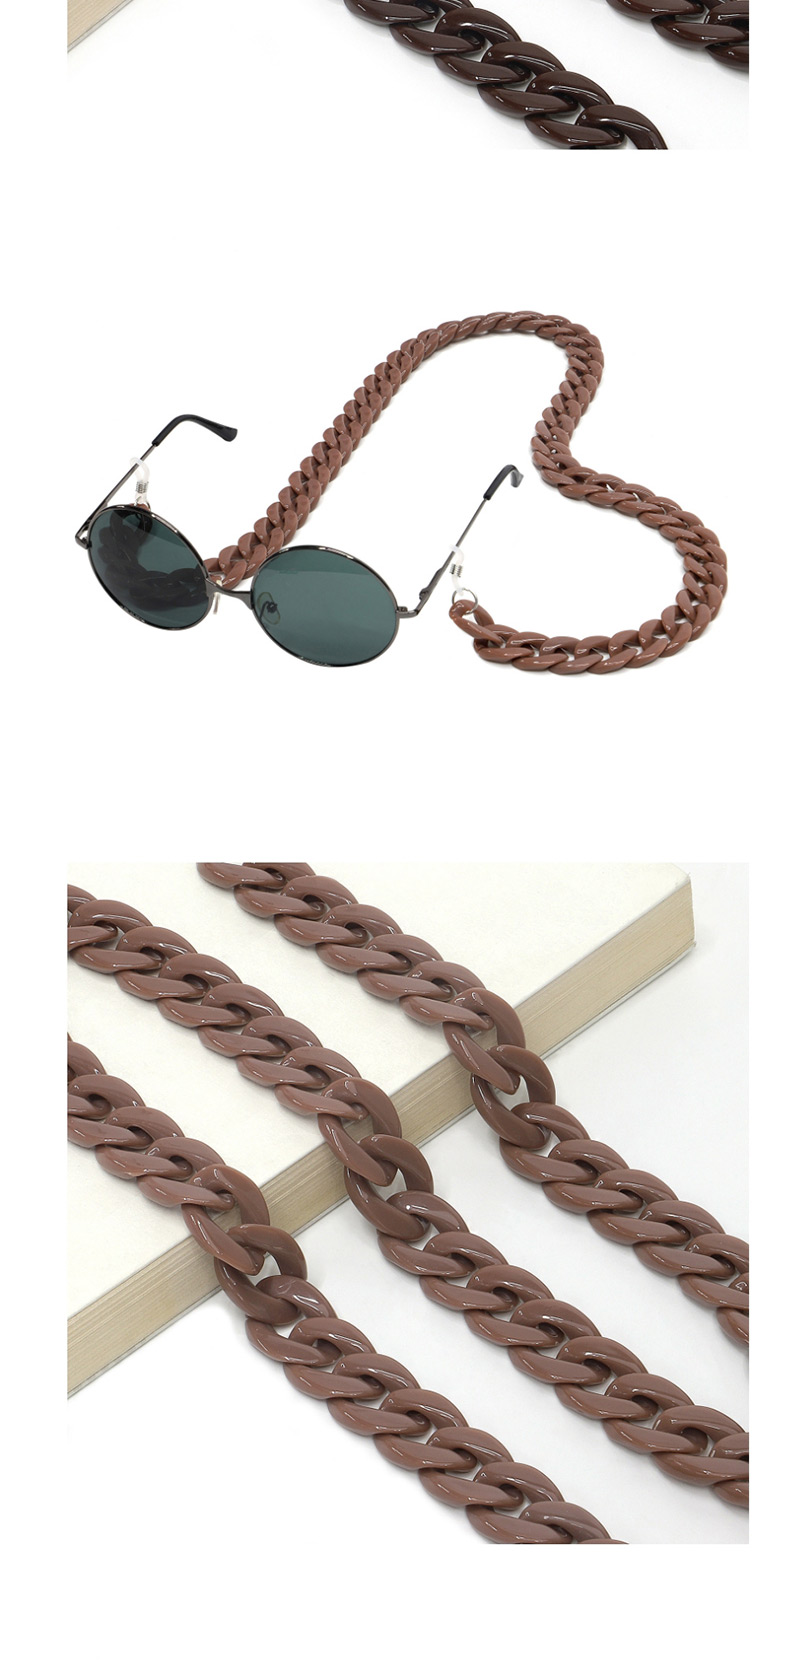  Black And White Acrylic Glasses Chain,Sunglasses Chain